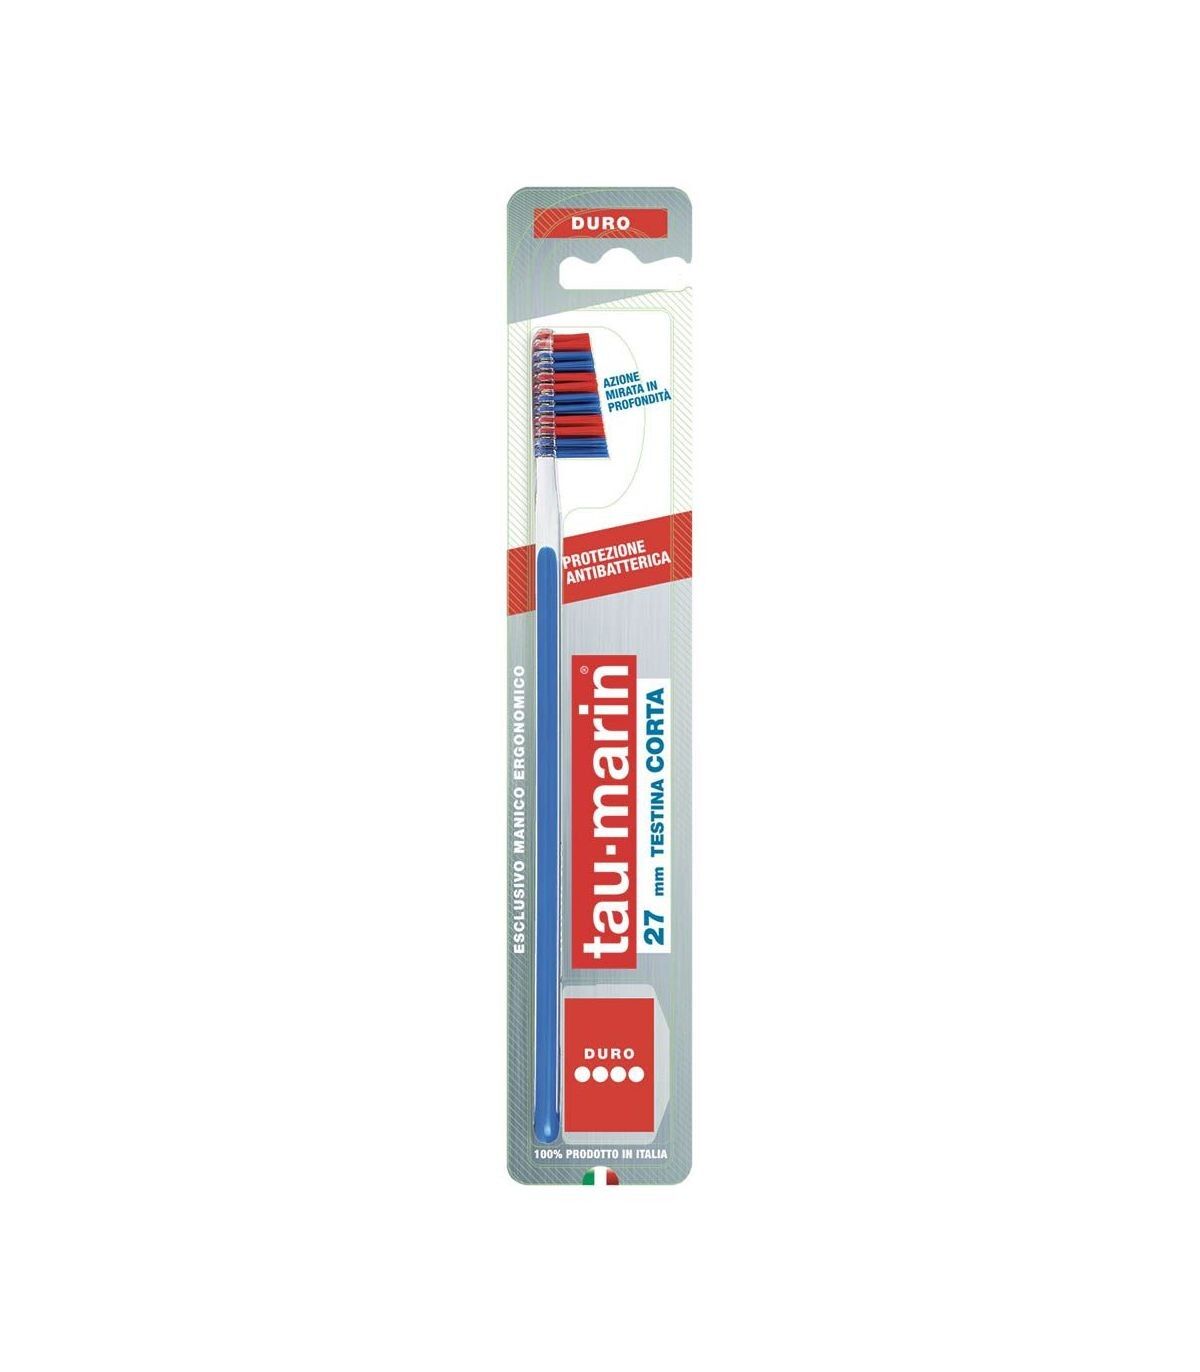 Alfasigma Taumarin spazzolino professional 27 duro antibatterico